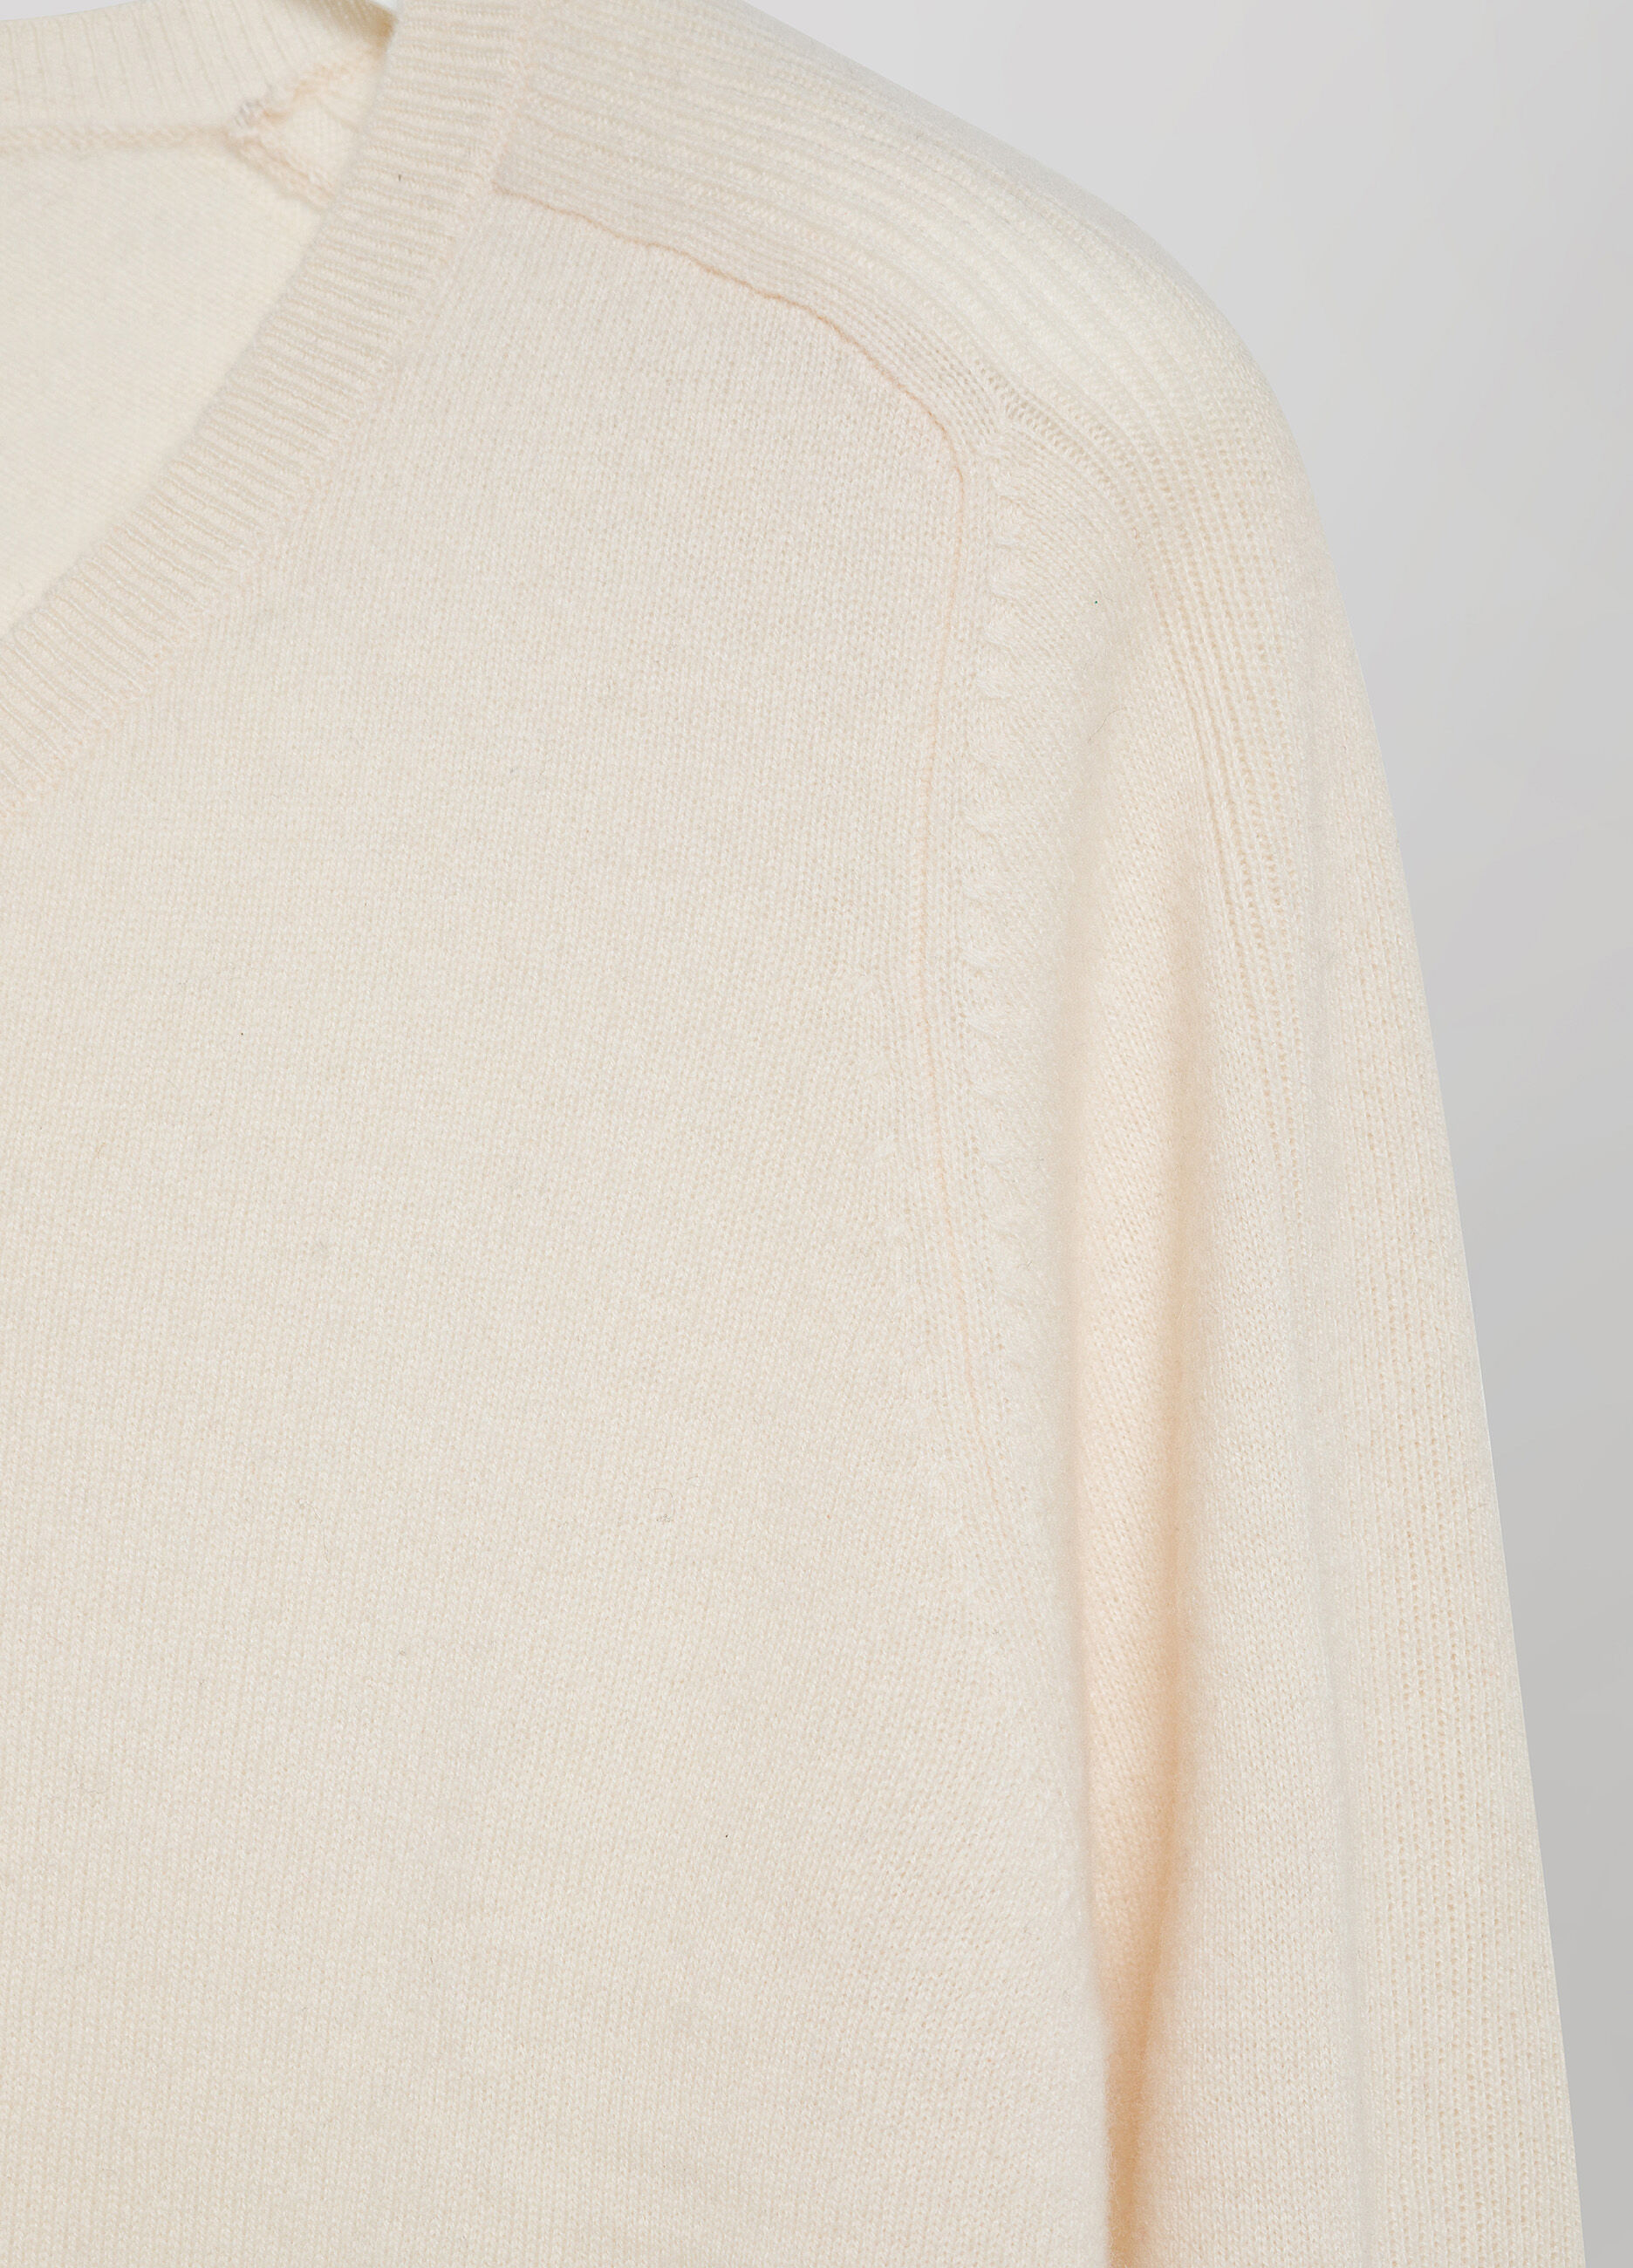 White cashmere blend tricot sweater